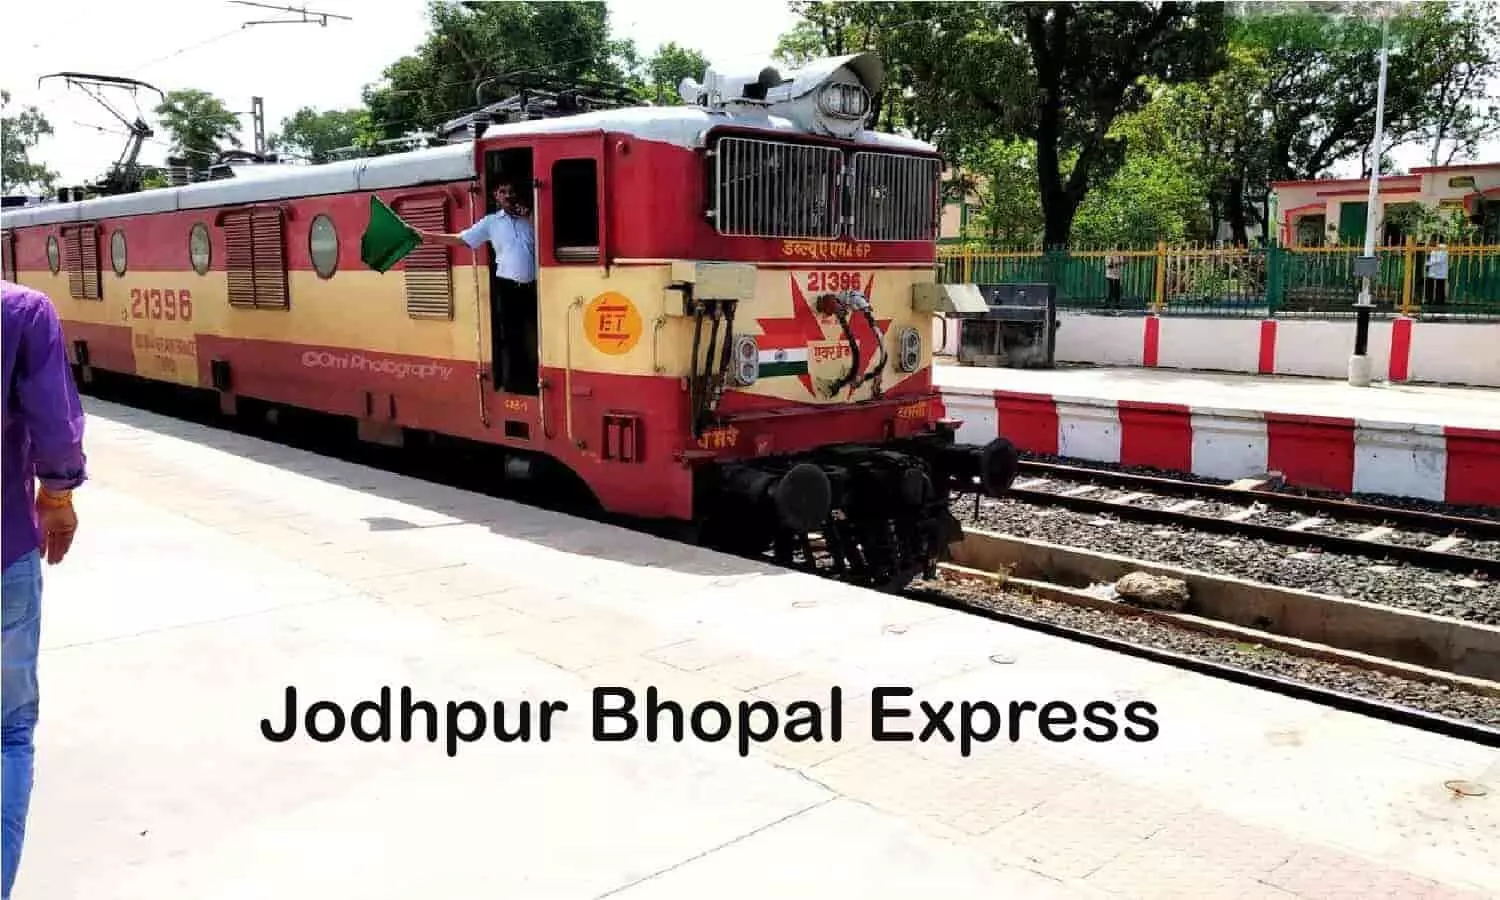 Jodhpur Bhopal Express